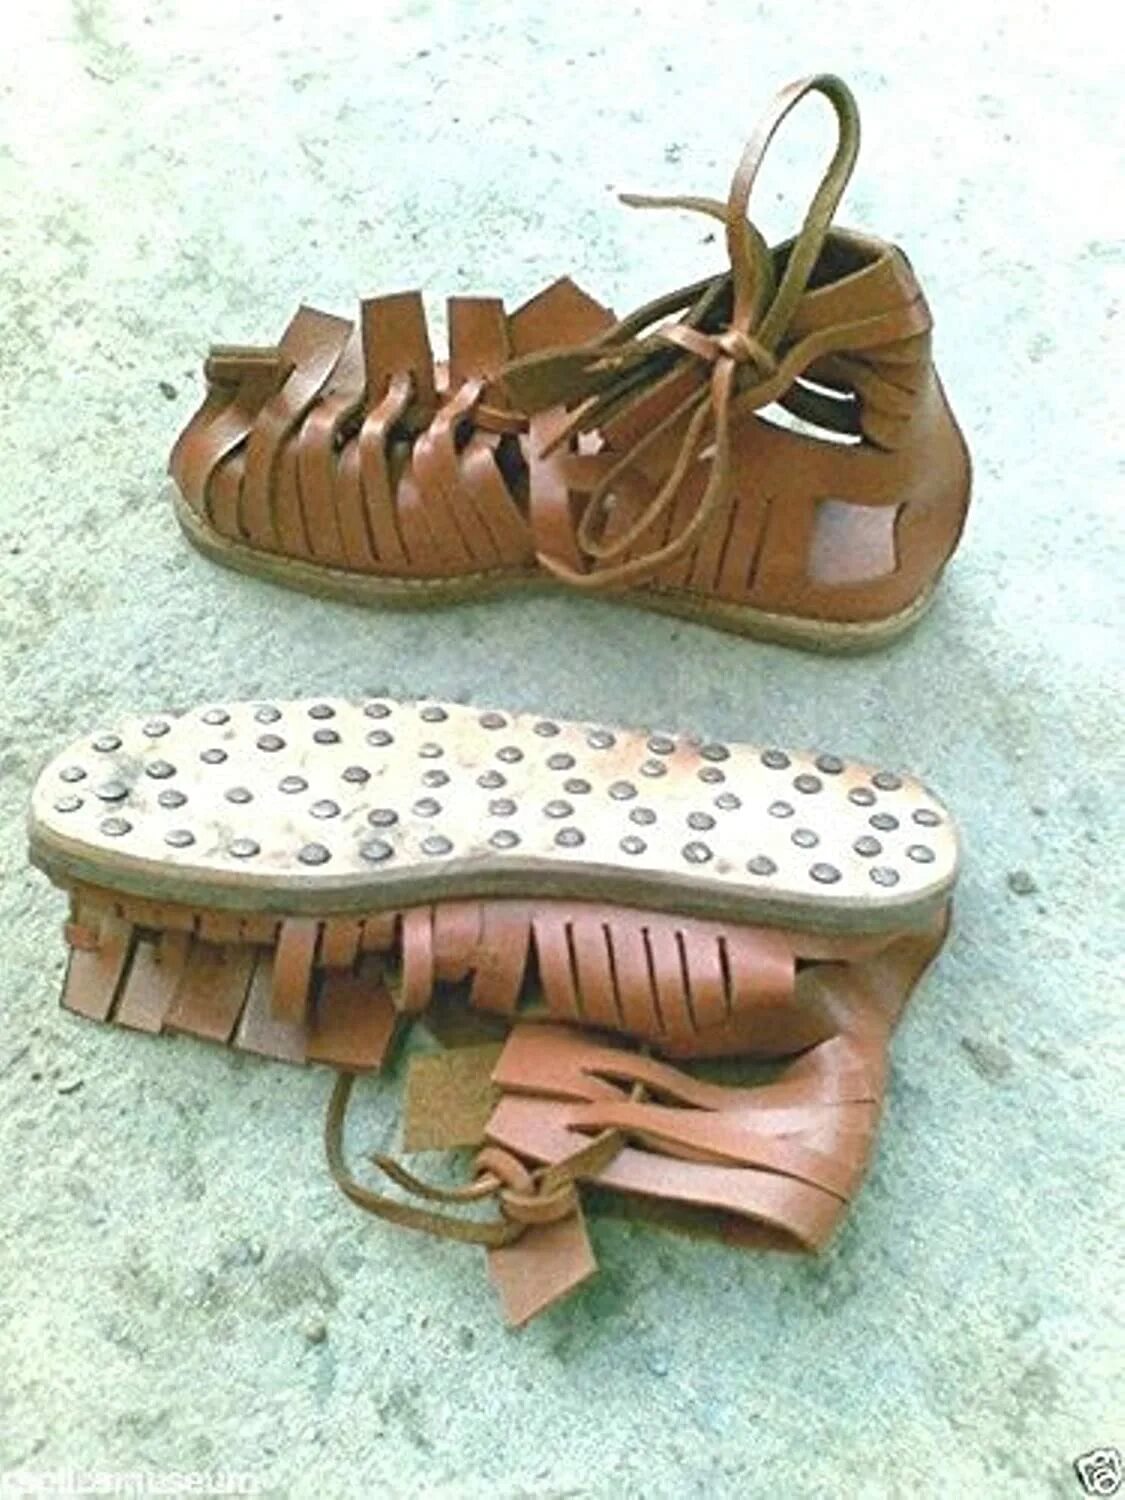 Римский сандаль. Римские сапоги калиги. Сандали легионера калиги. Калиги обувь древний Рим. Сапоги калиги Рим.